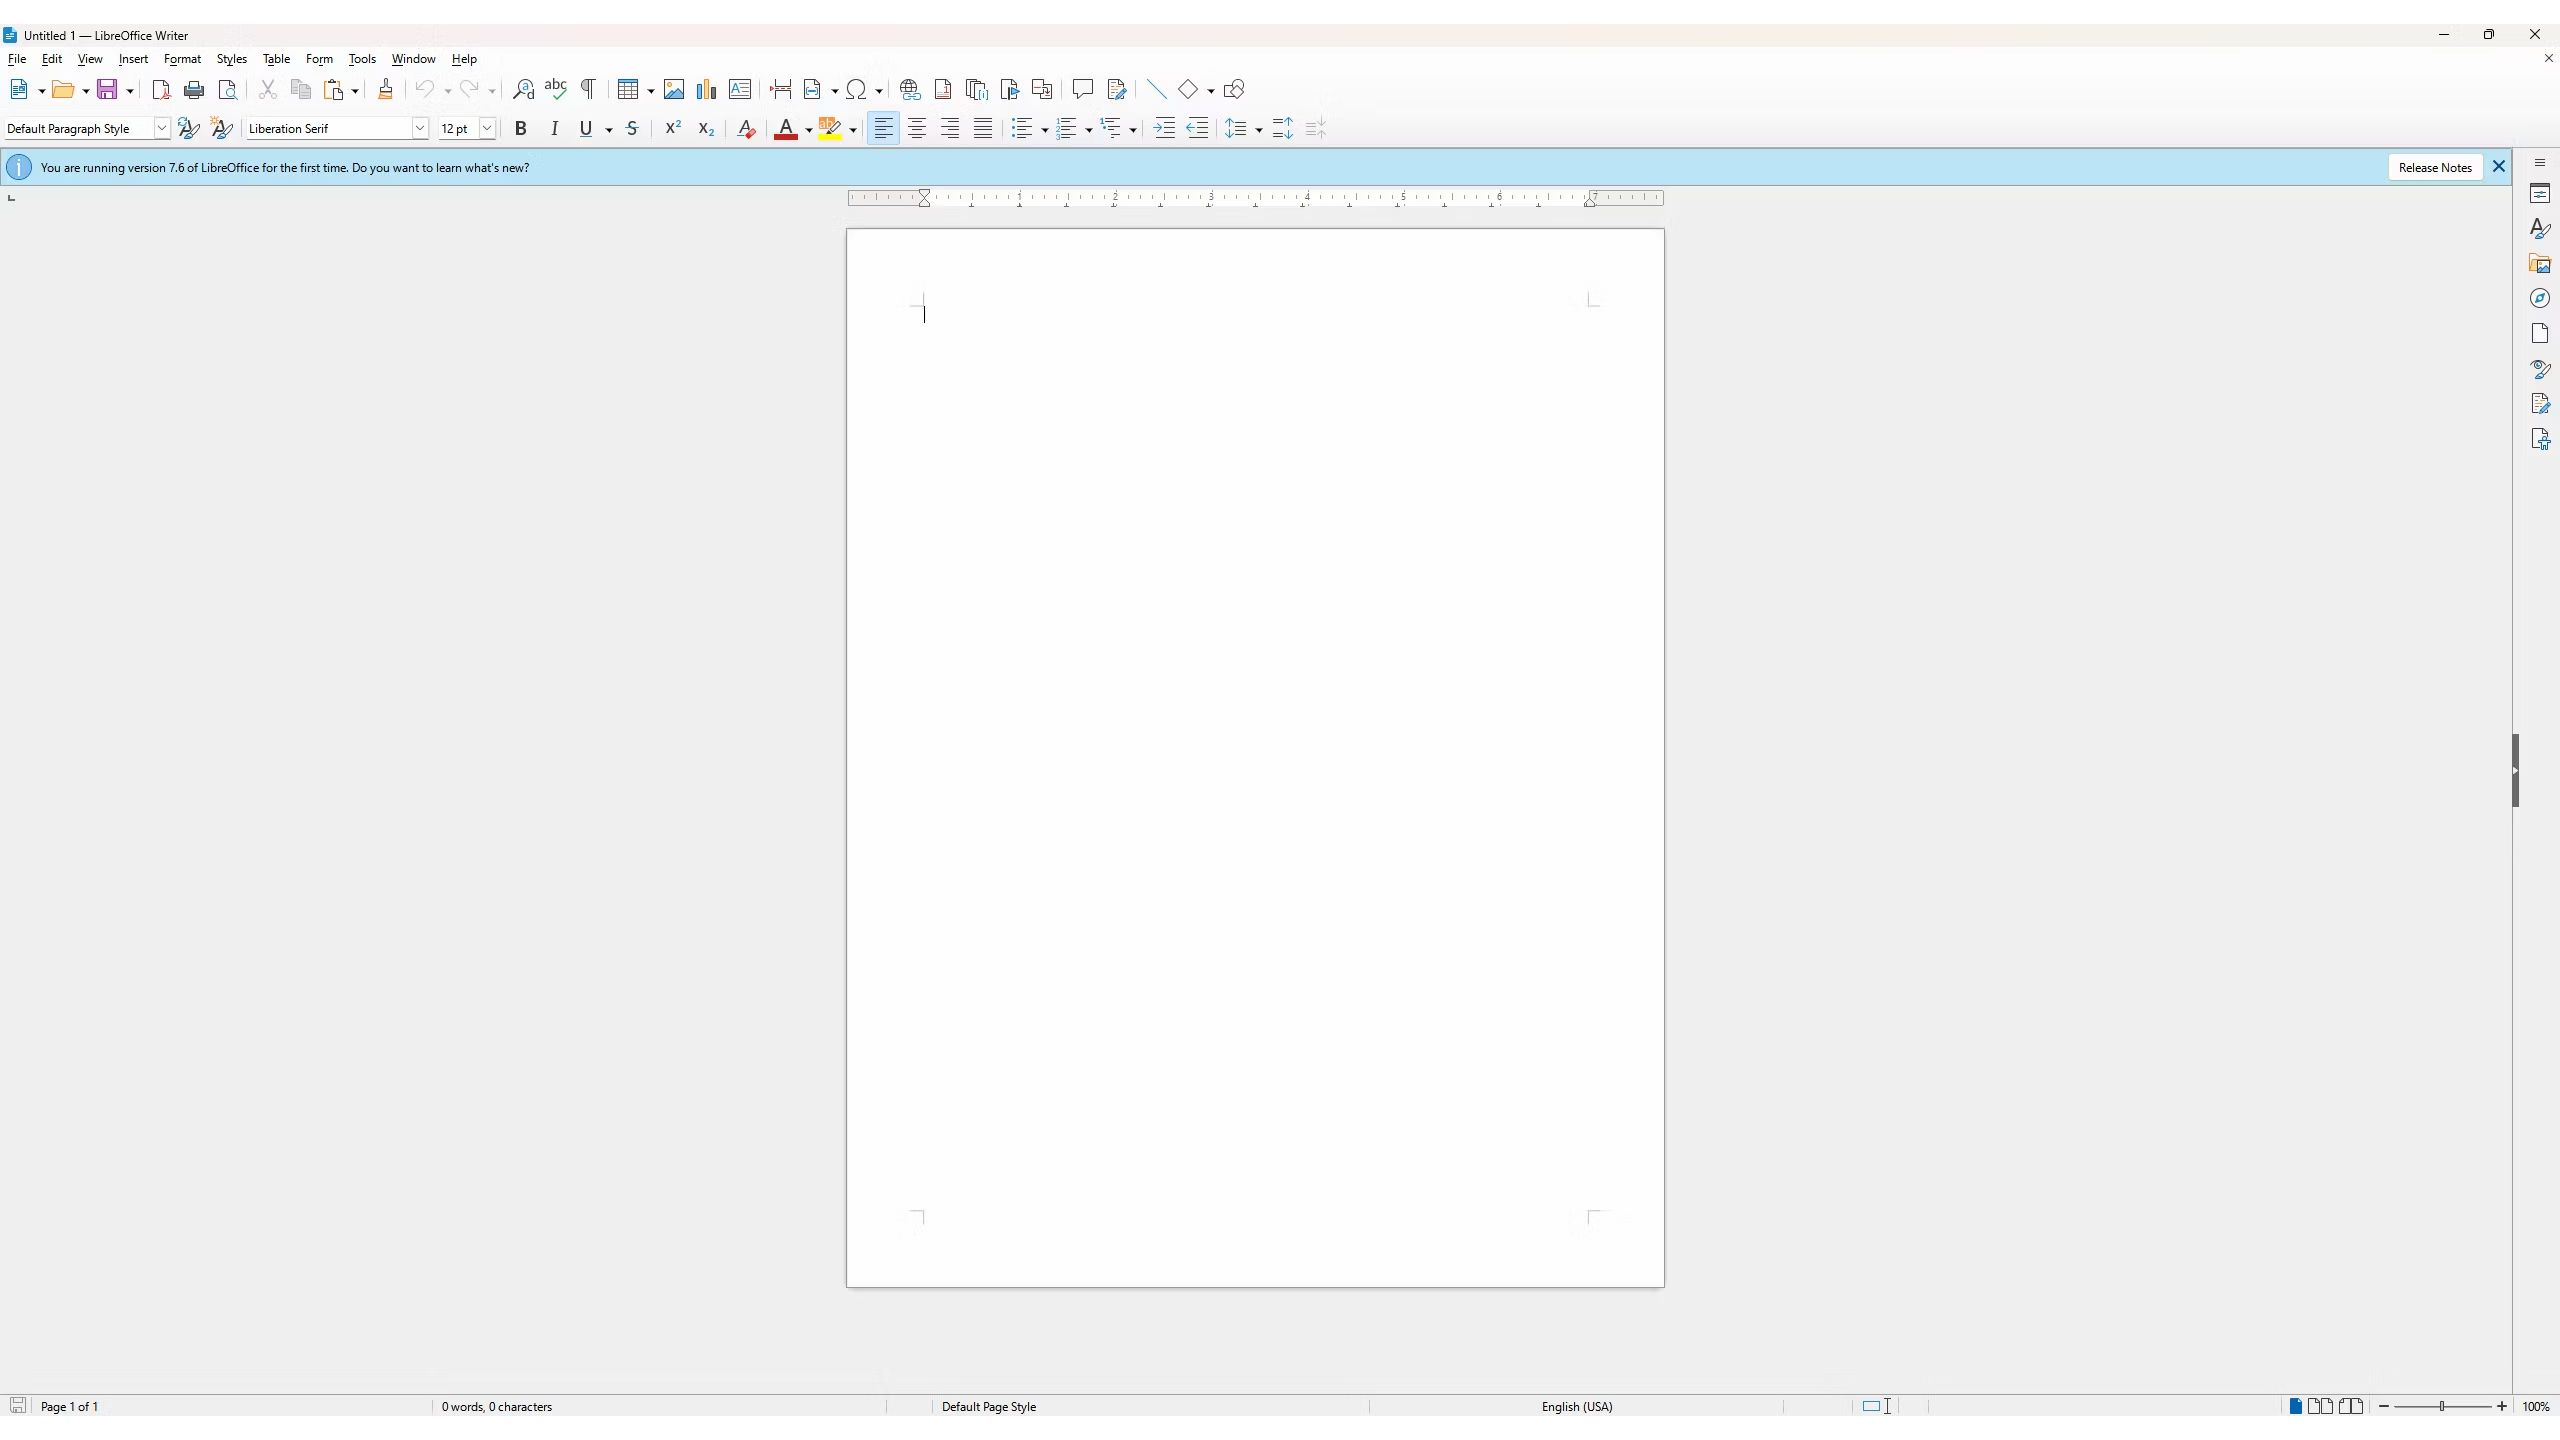 LibreOffice's interface